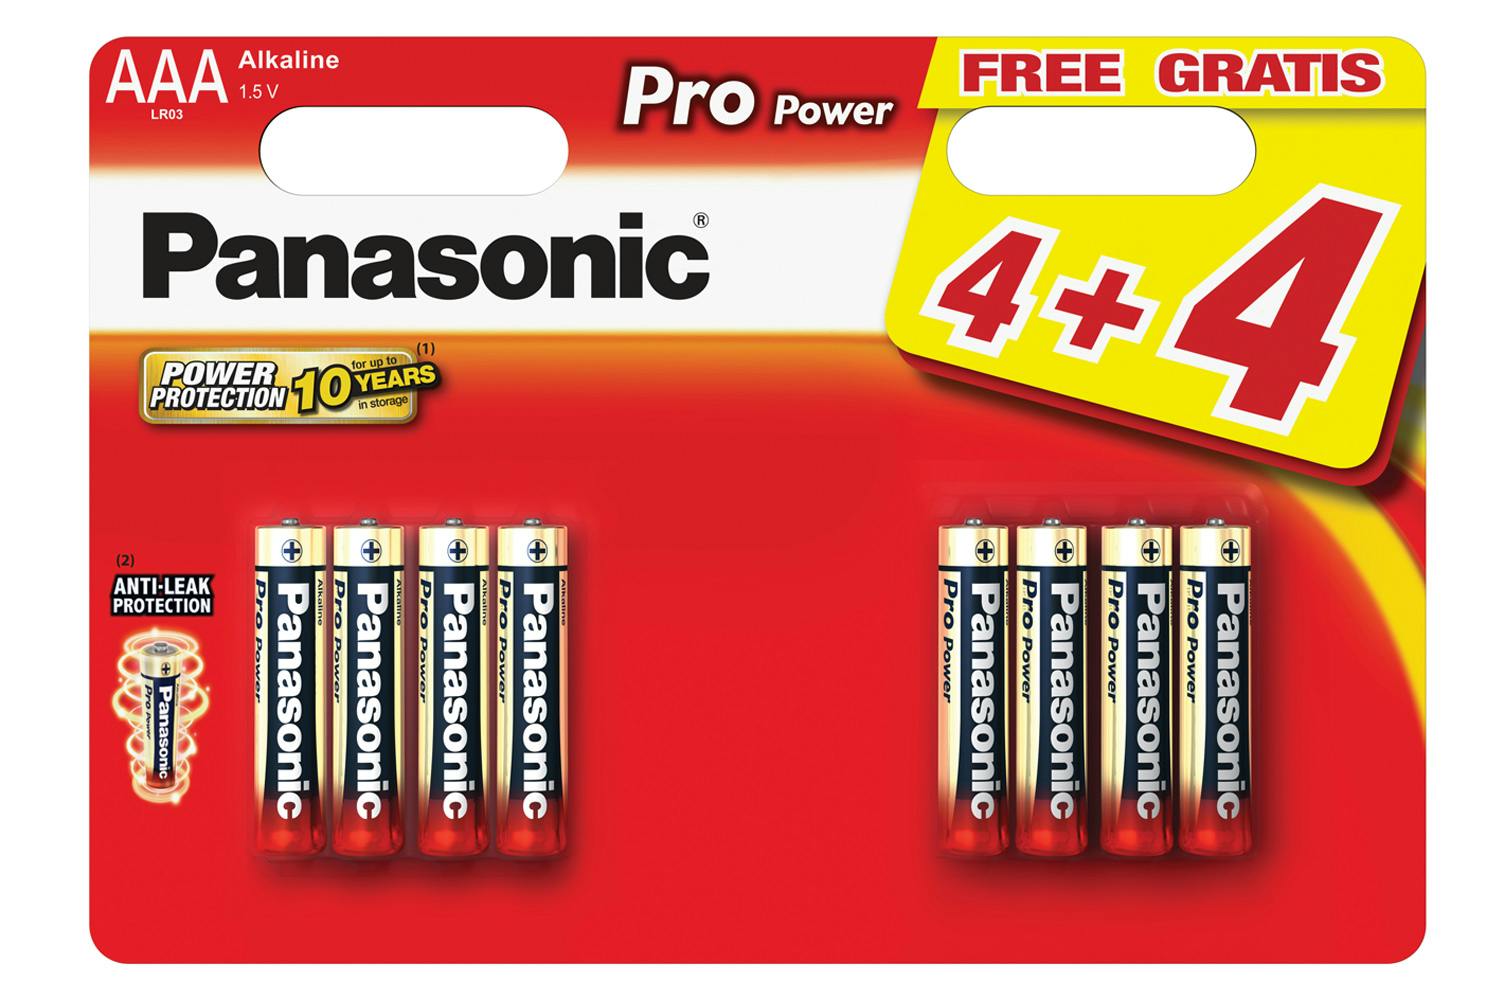 Panasonic PP Gold AAA Batteries | 4+4 Free